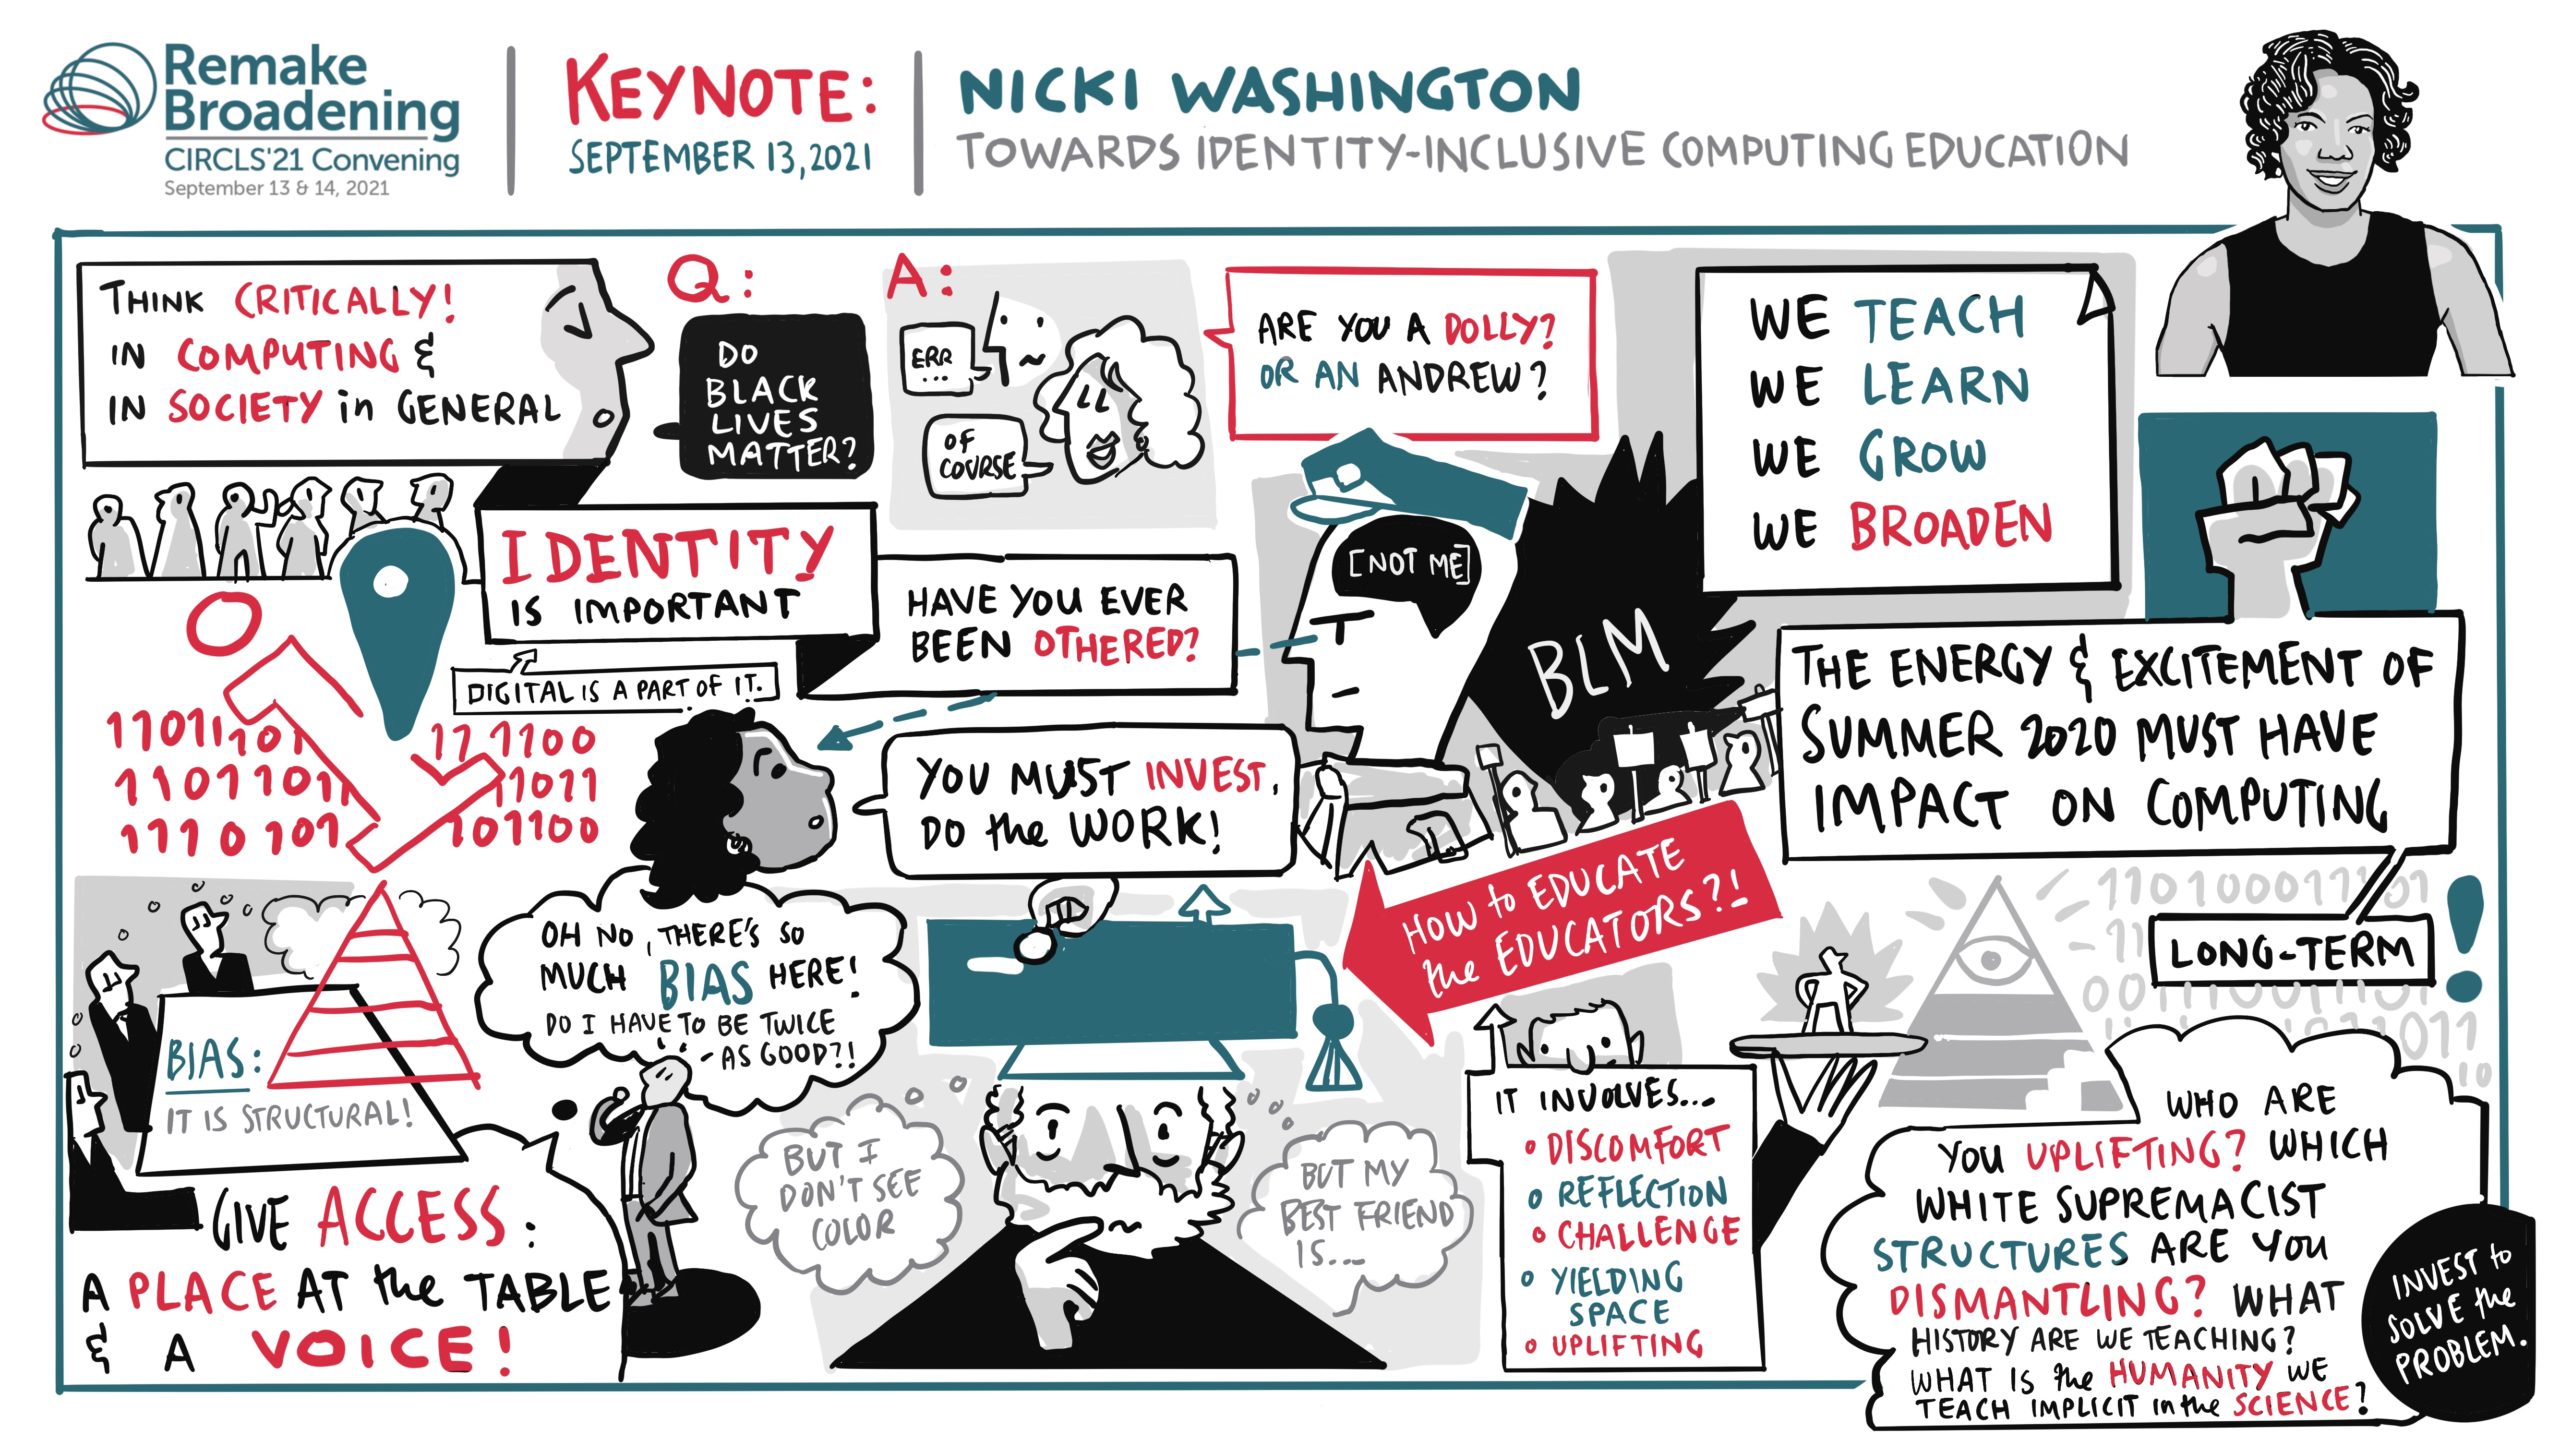 Keynote Dr. Nicki Washington